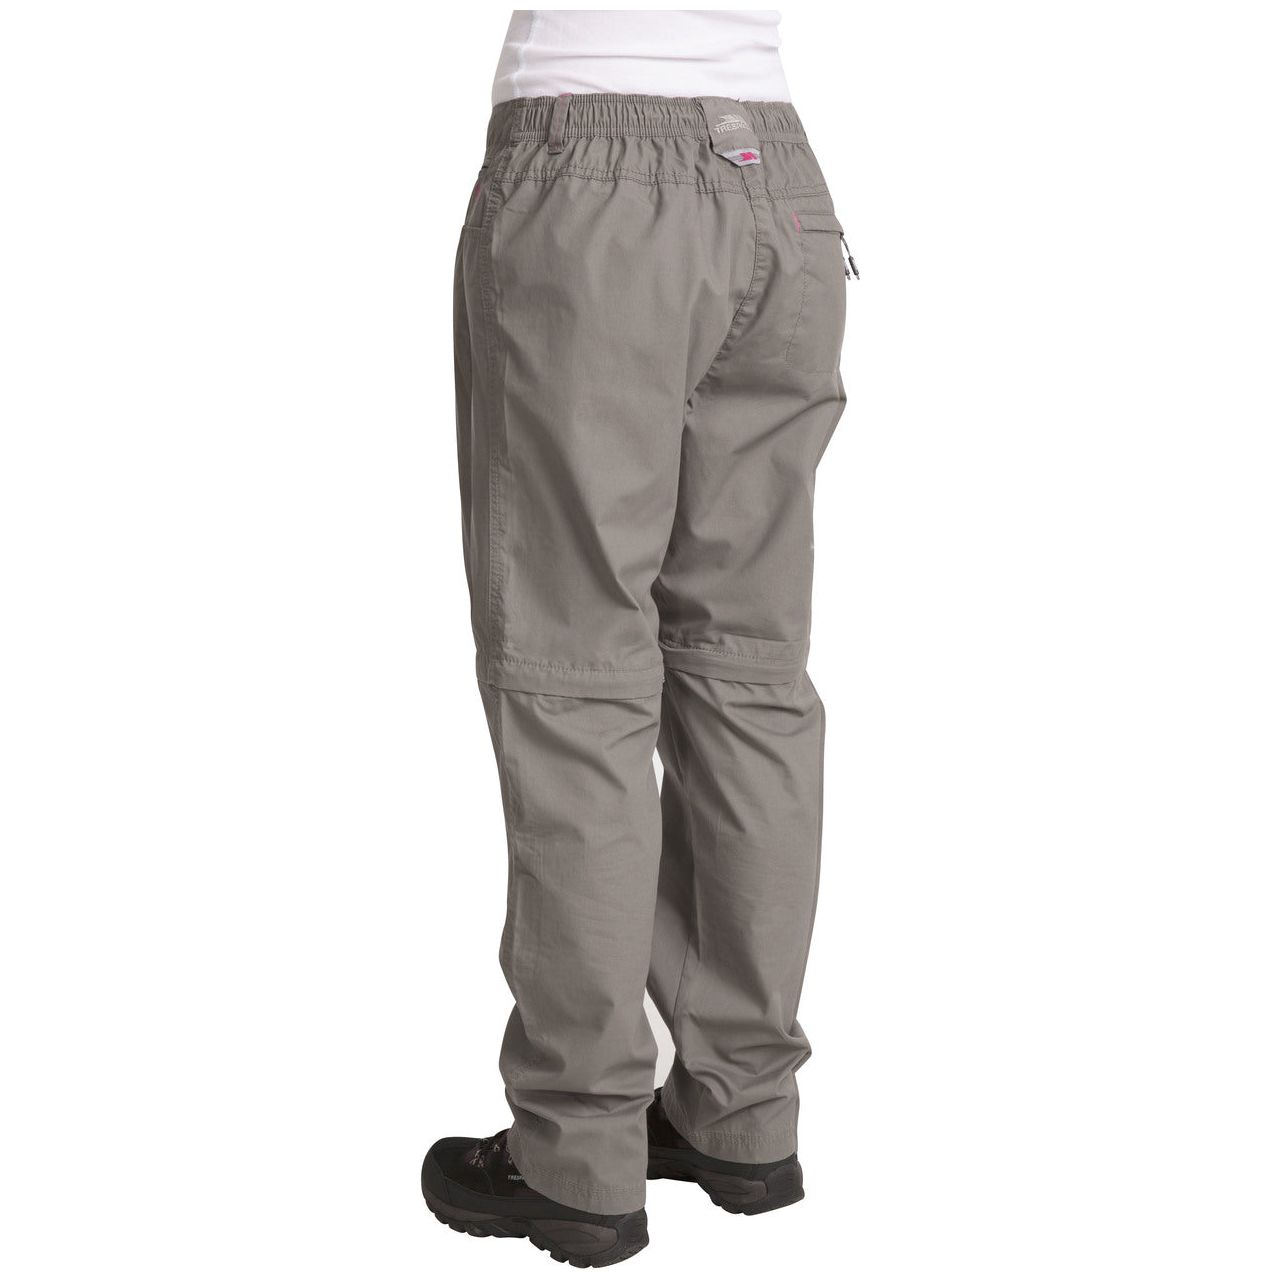 Brasher Men's Convertible Walking Trousers Colour... - Depop